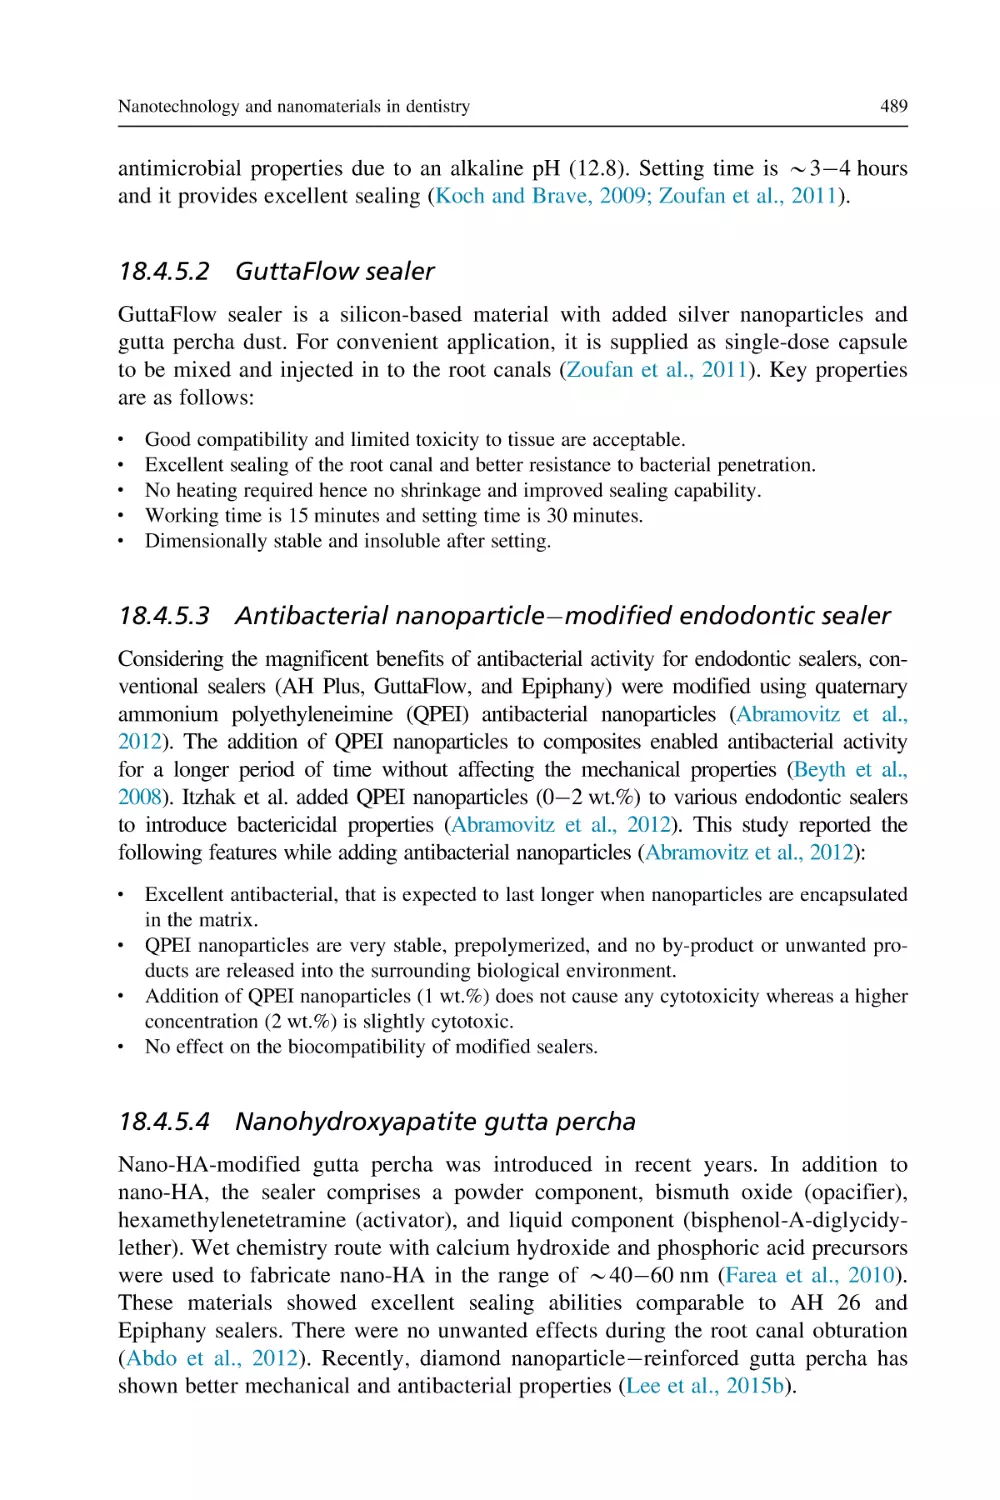 18.4.5.2 GuttaFlow sealer
18.4.5.3 Antibacterial nanoparticle–modified endodontic sealer
18.4.5.4 Nanohydroxyapatite gutta percha